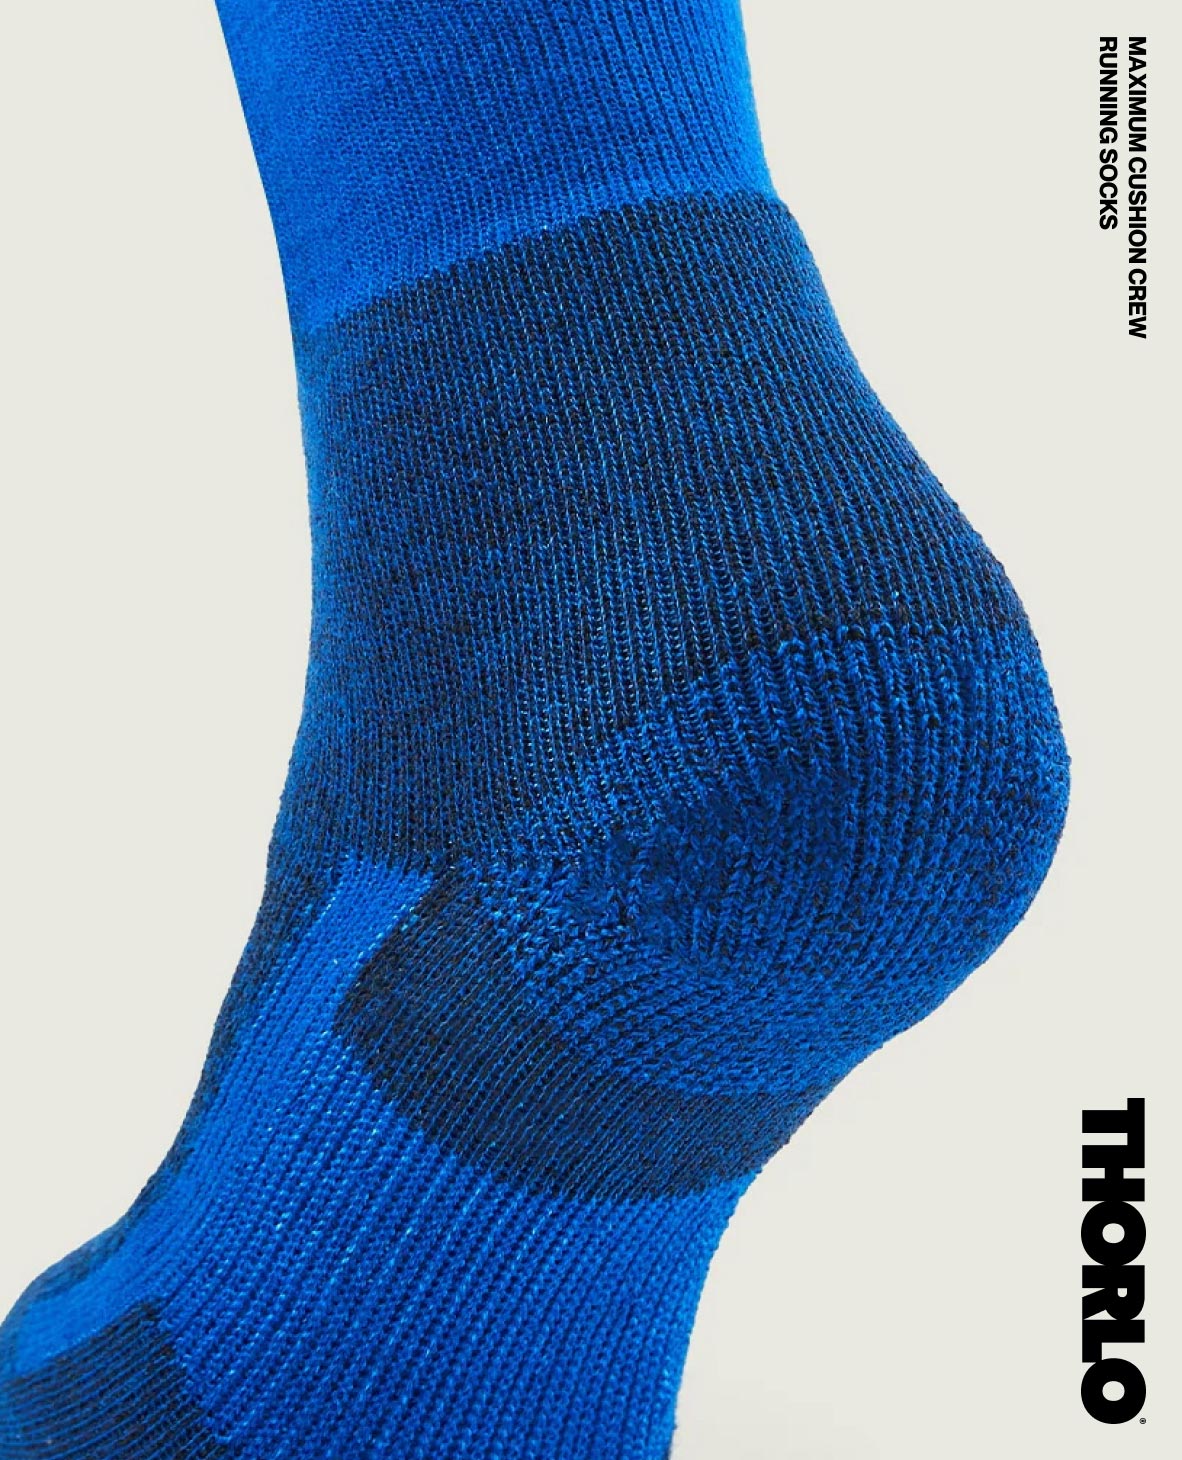 Thorlo Sock ad